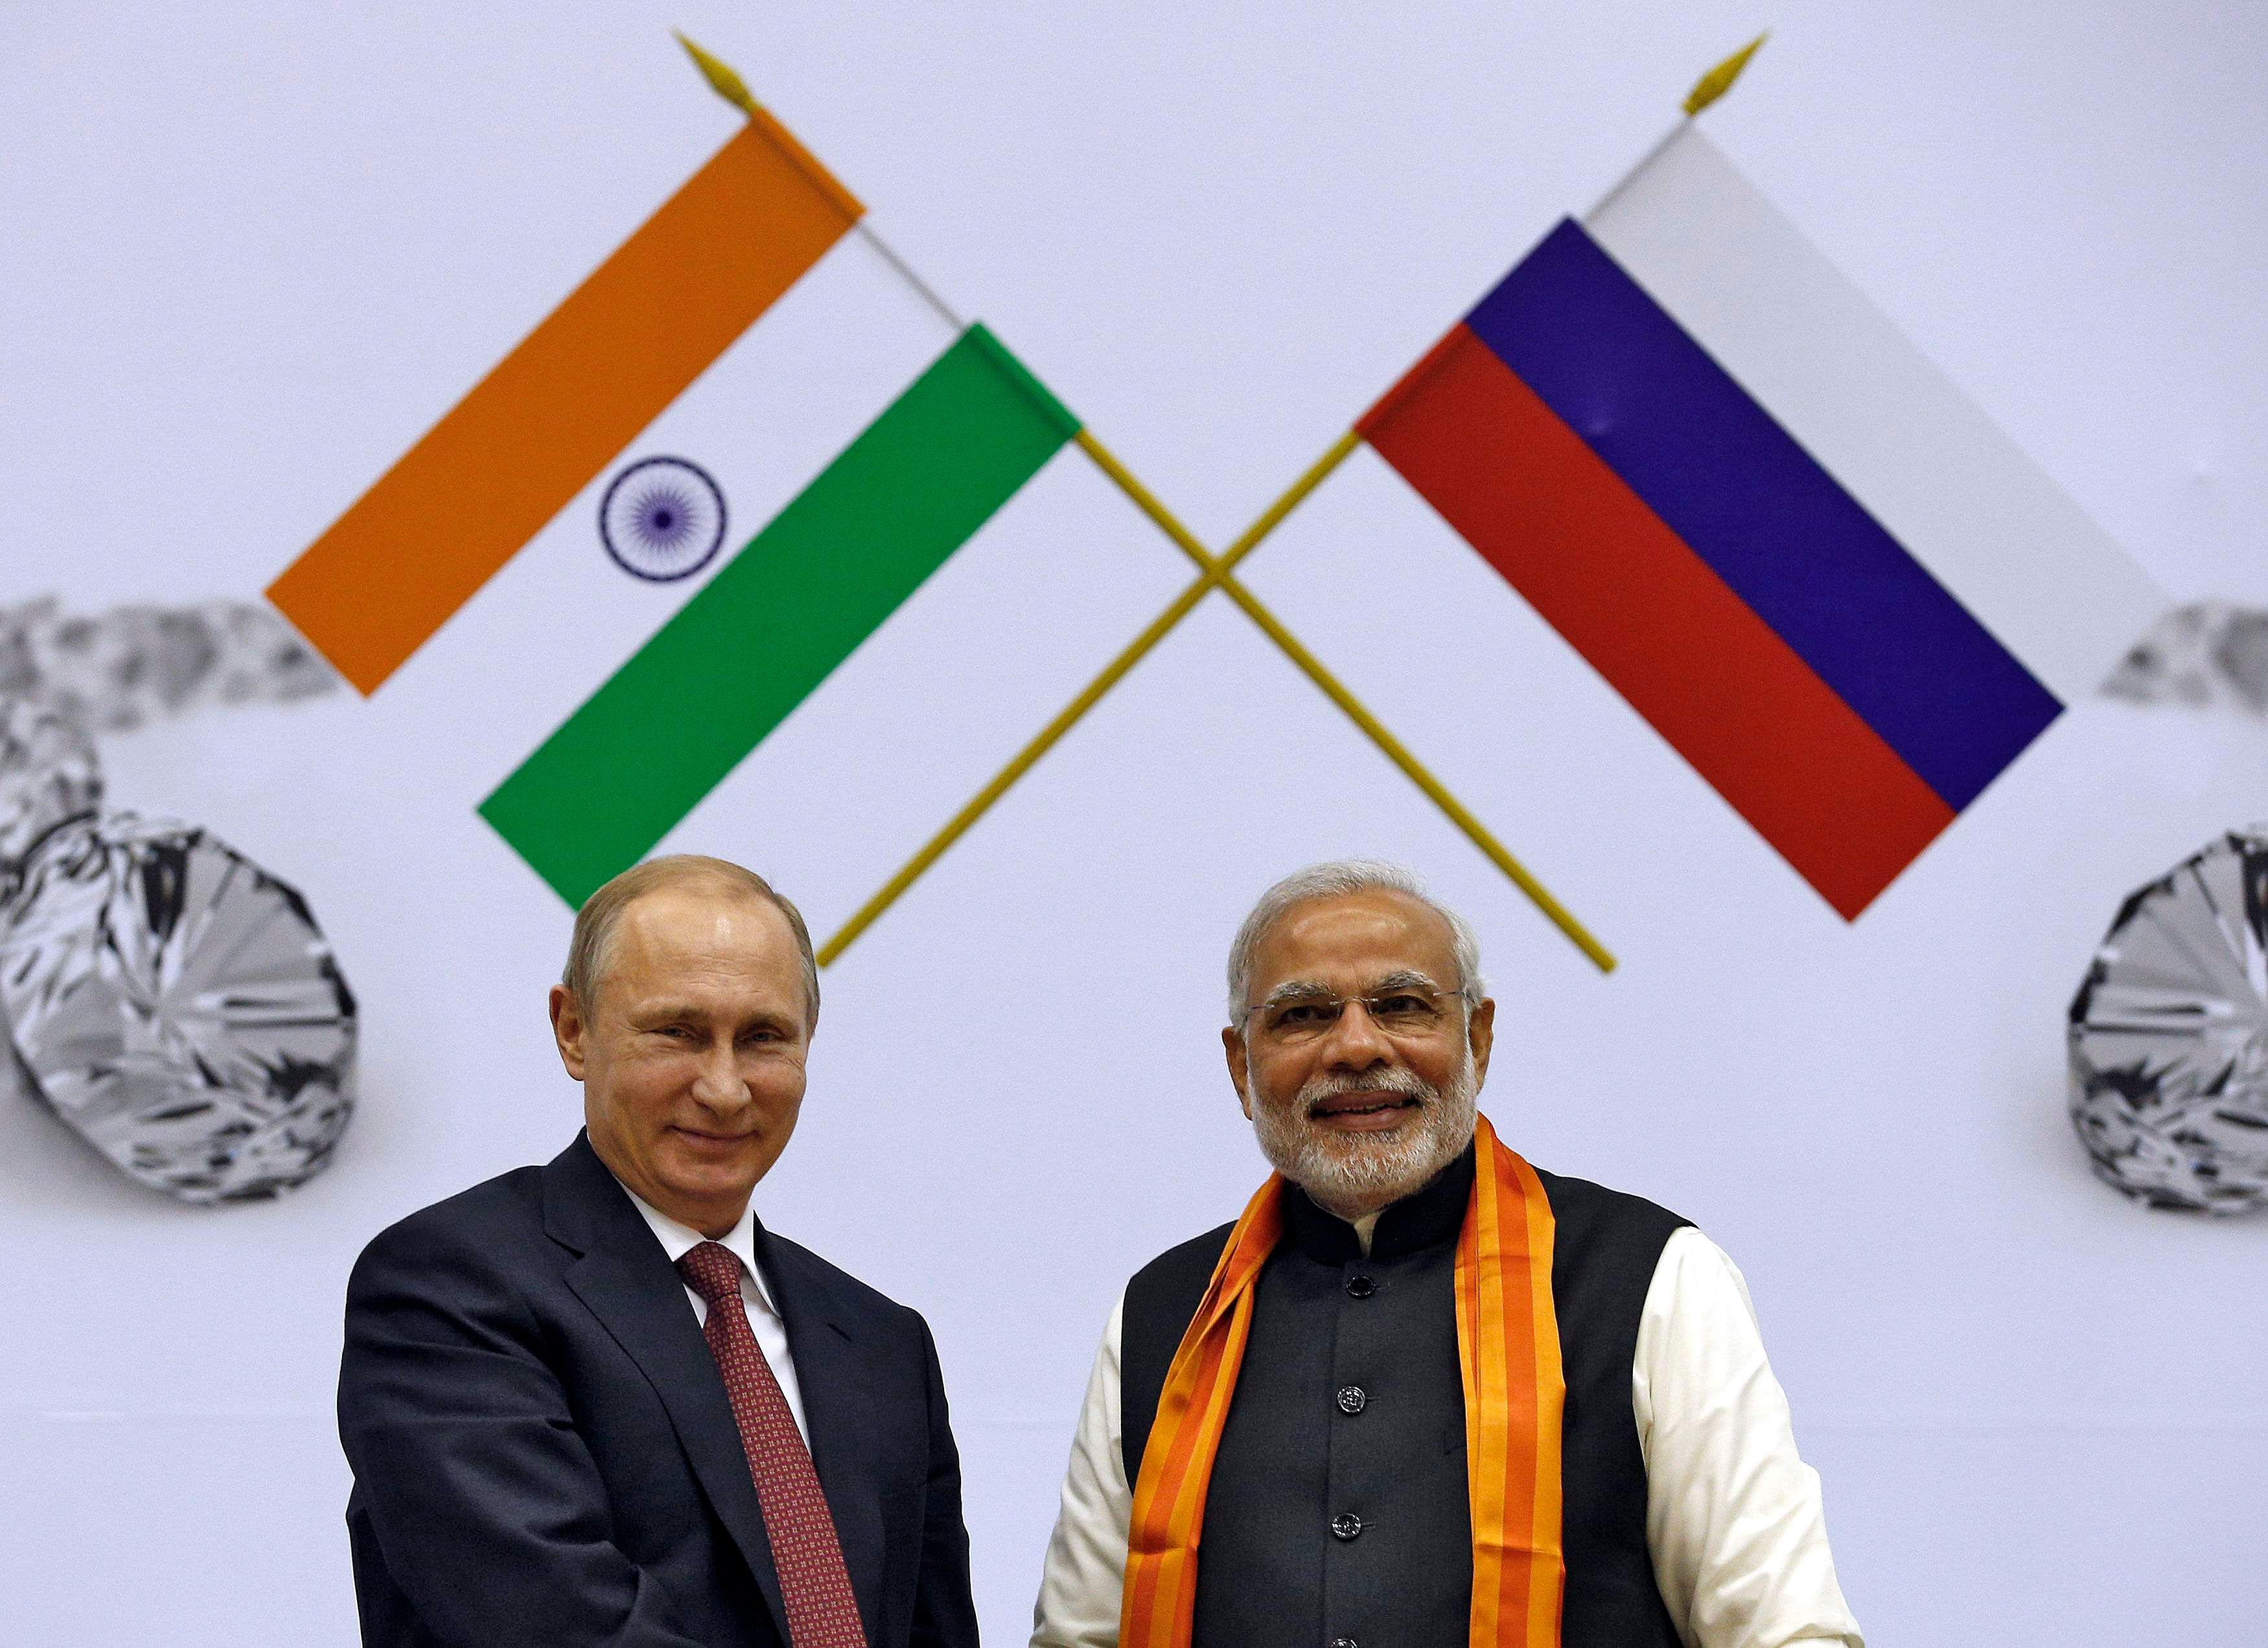 Russian President Vladimir Putin (L) and India's Prime Minister Narendra Modi smile during the inauguration of World Diamond Conference in New Delhi December 11, 2014.Photo: Reuters